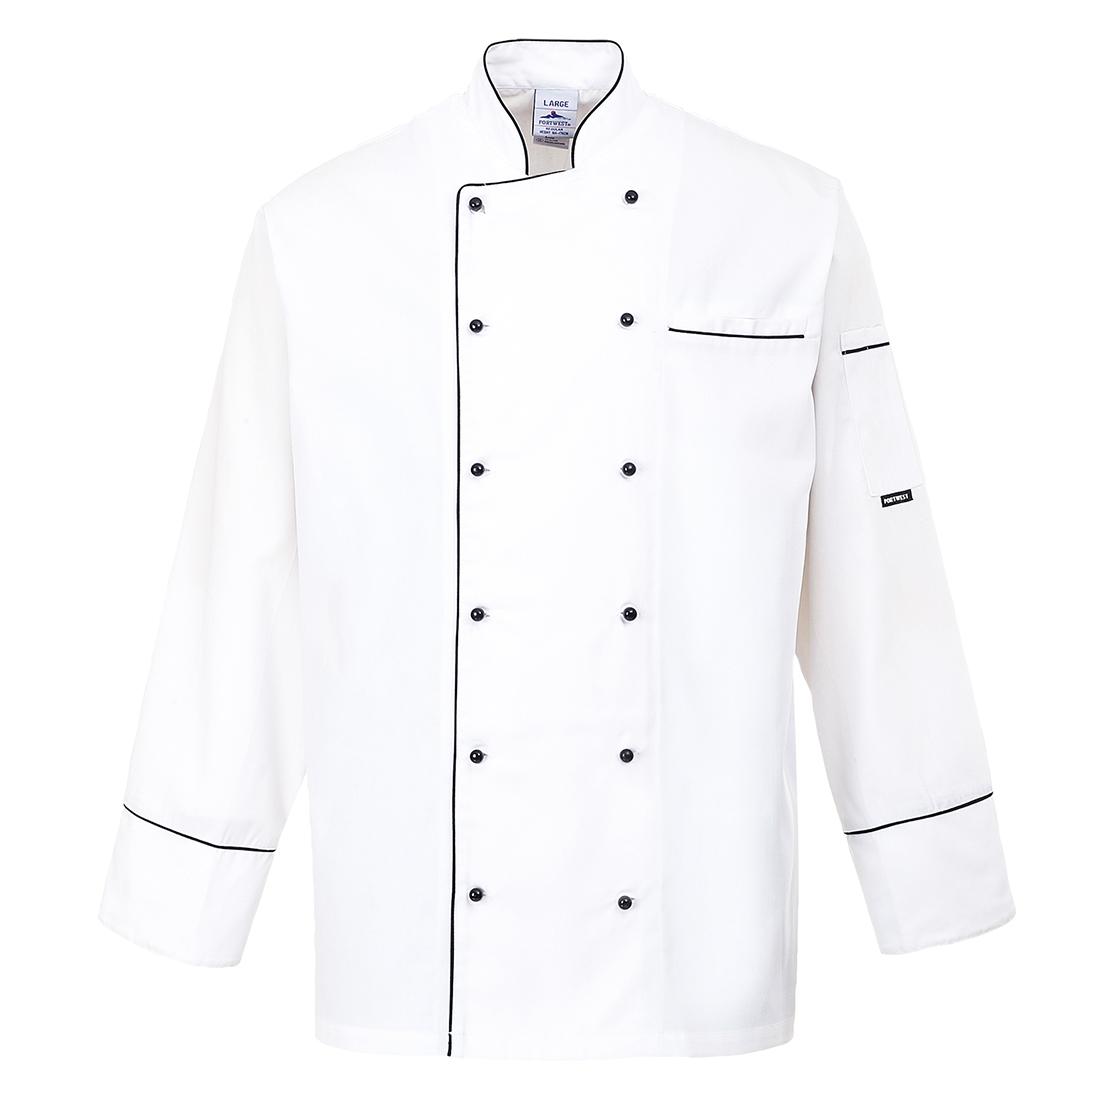 Cambridge Chefs Jacket